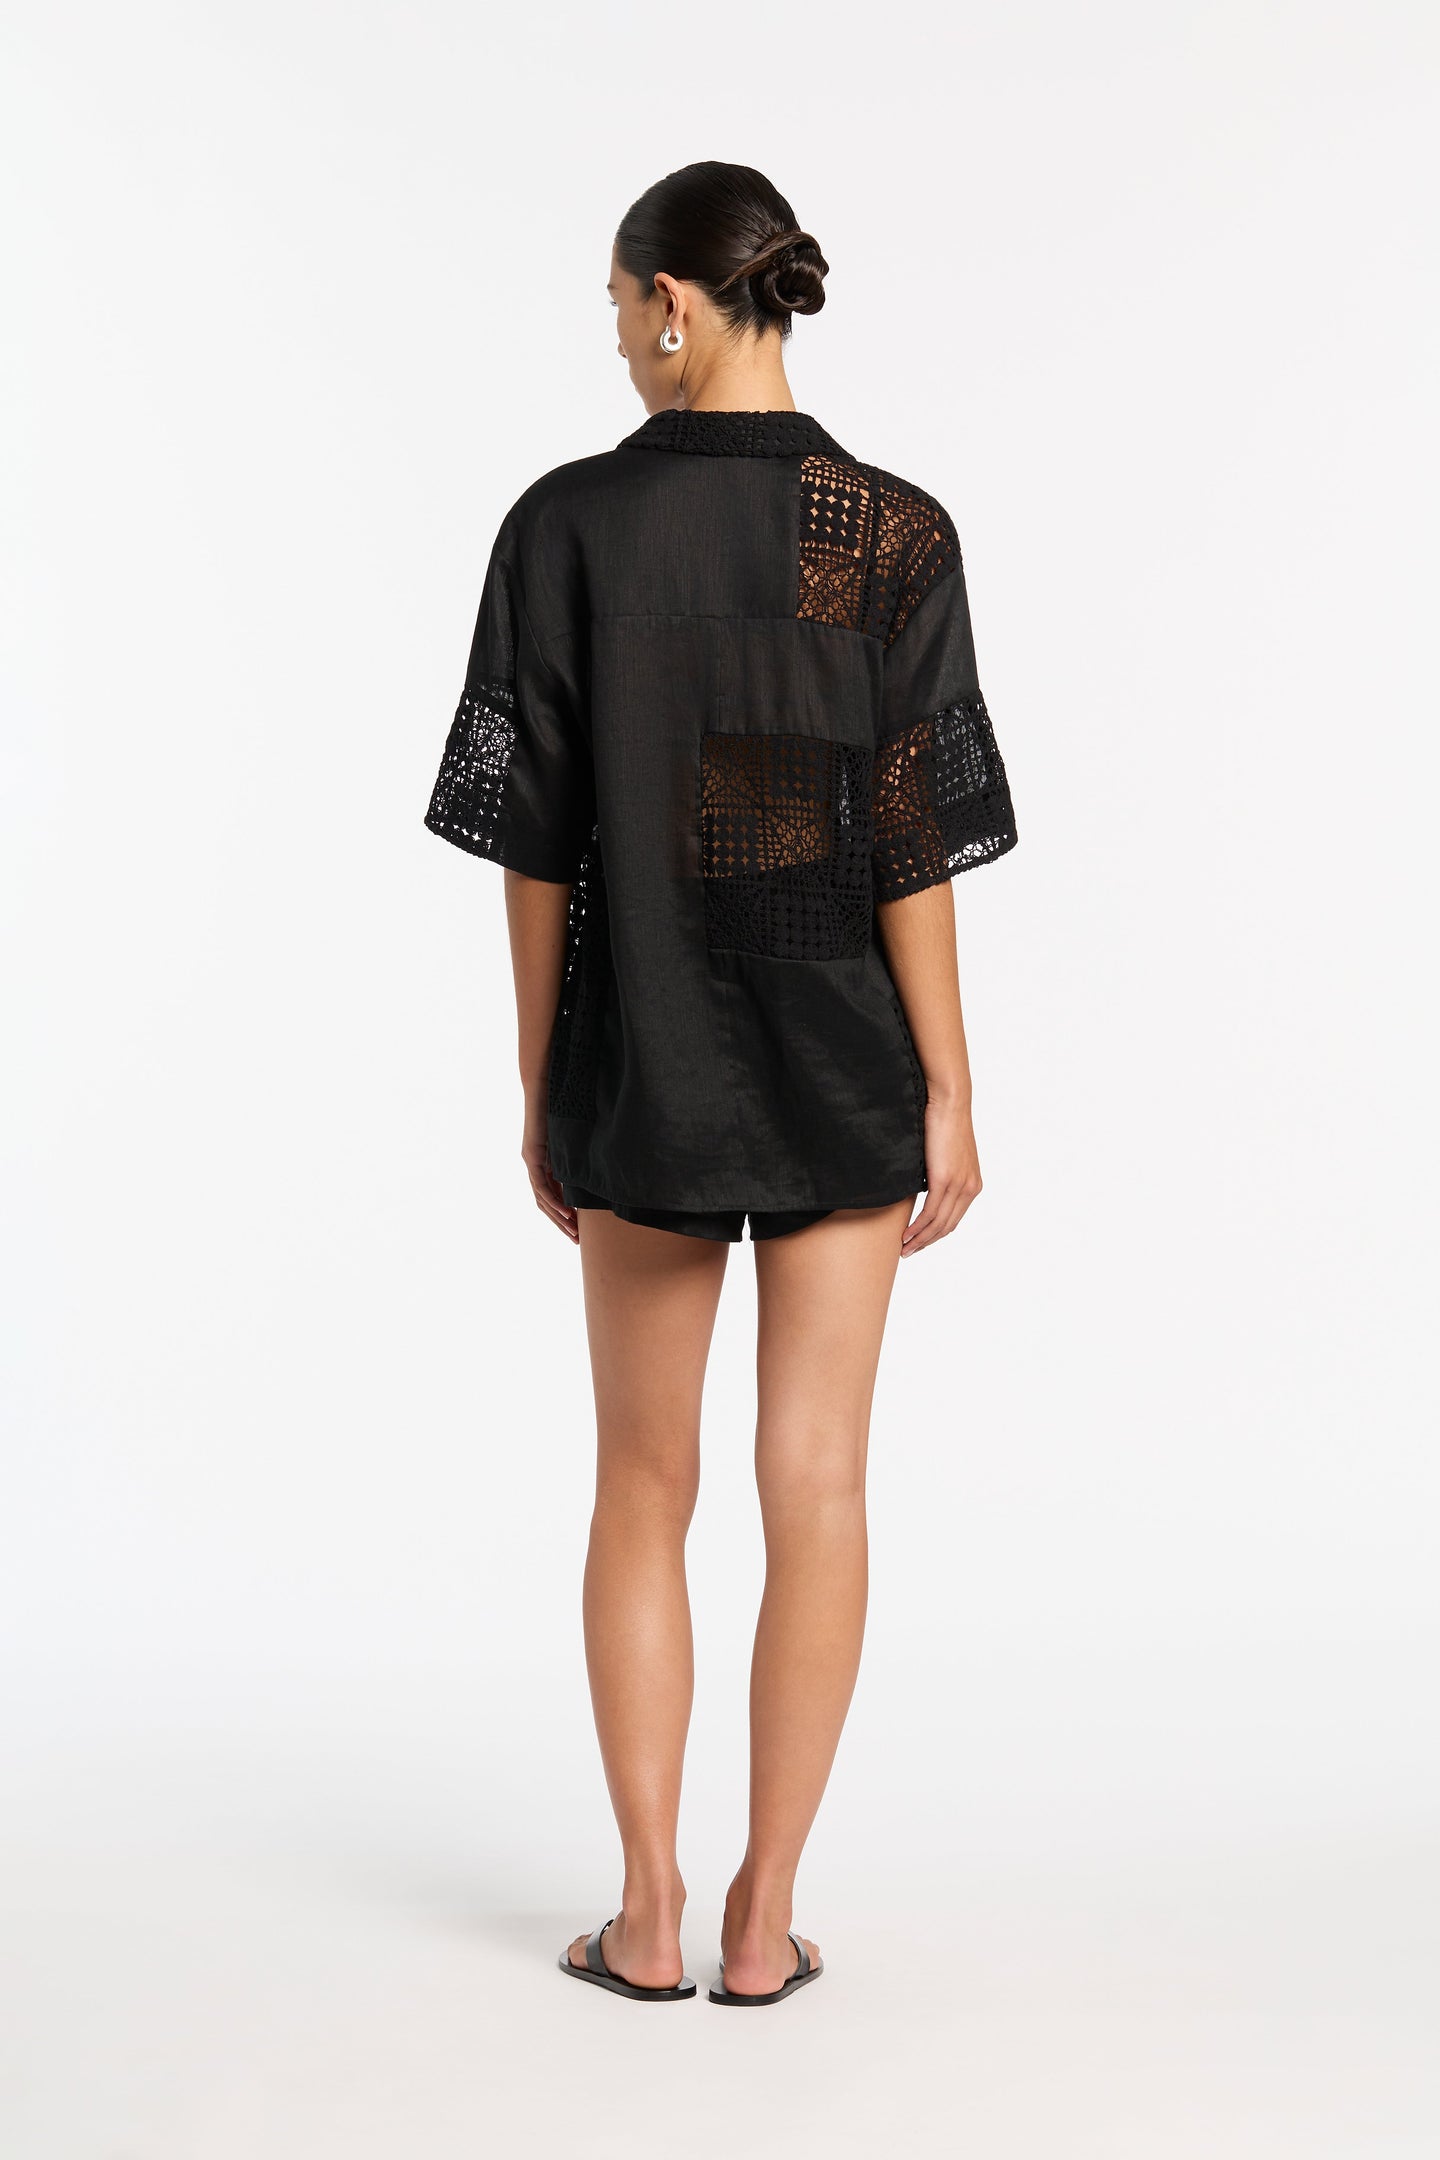 SIR the label Rayure Patchwork Shirt Black Crochet